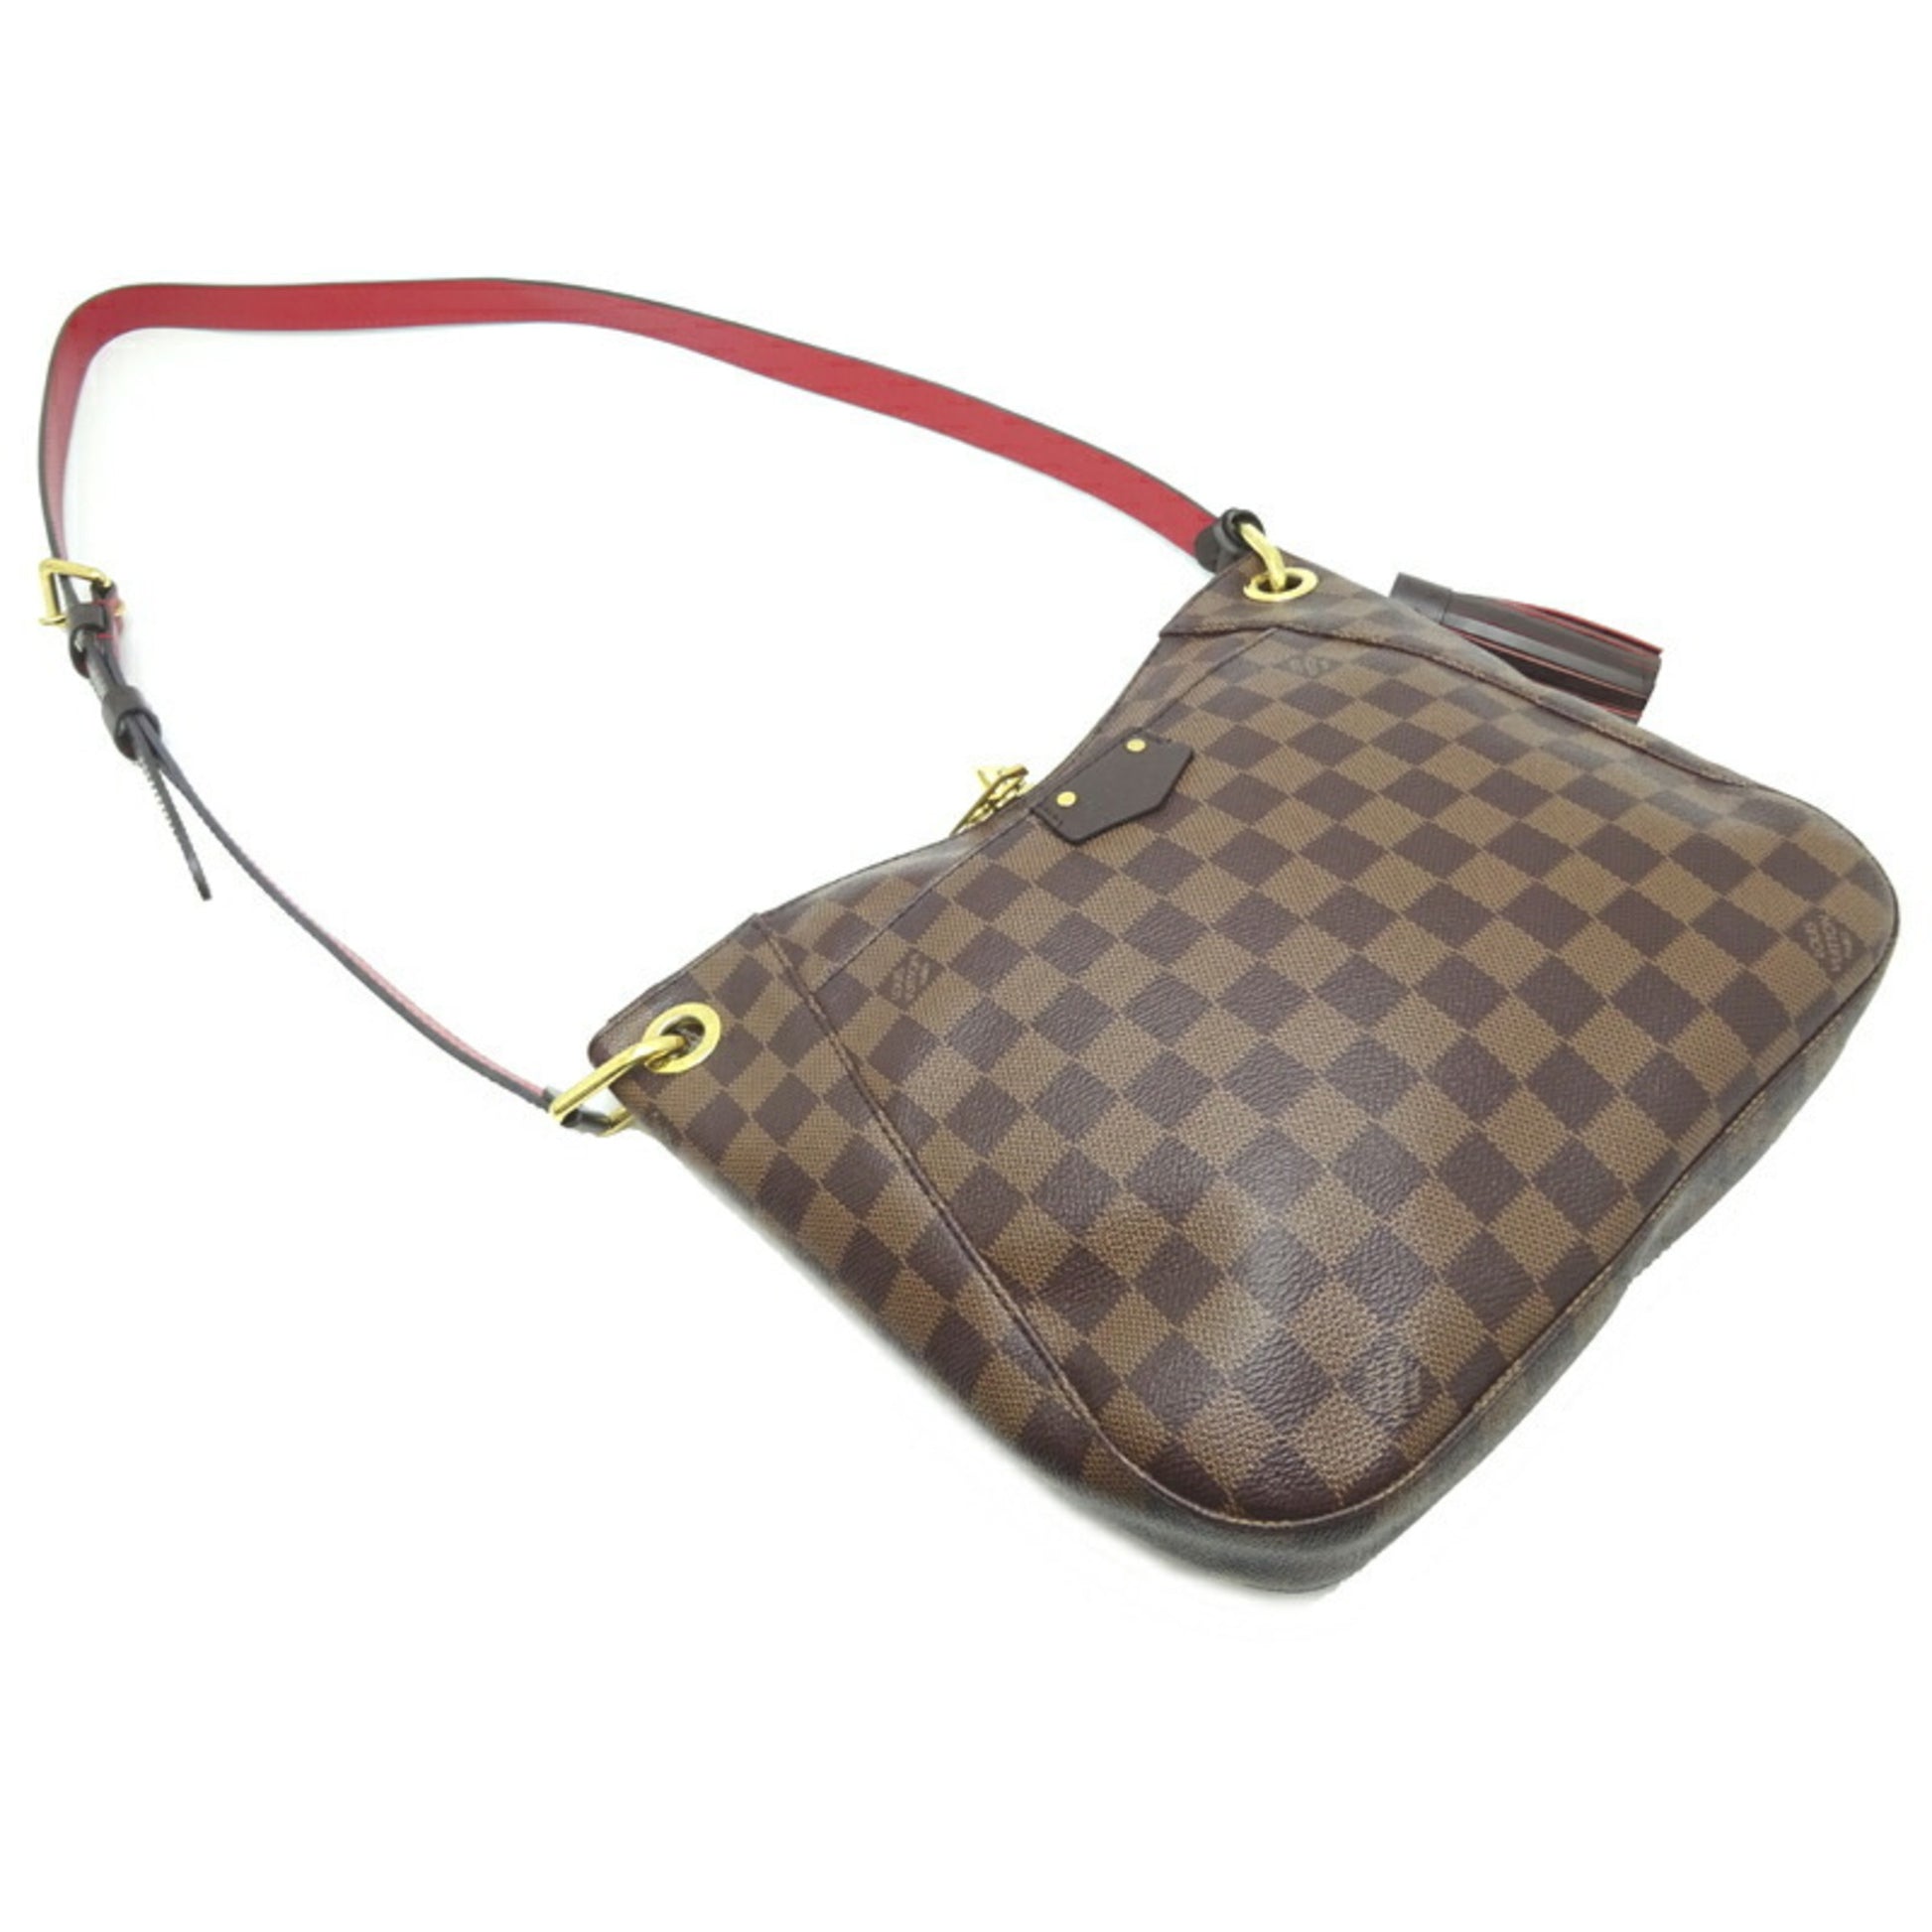 Louis Vuitton Damier South Bank N42230 Women's Shoulder Bag Damier